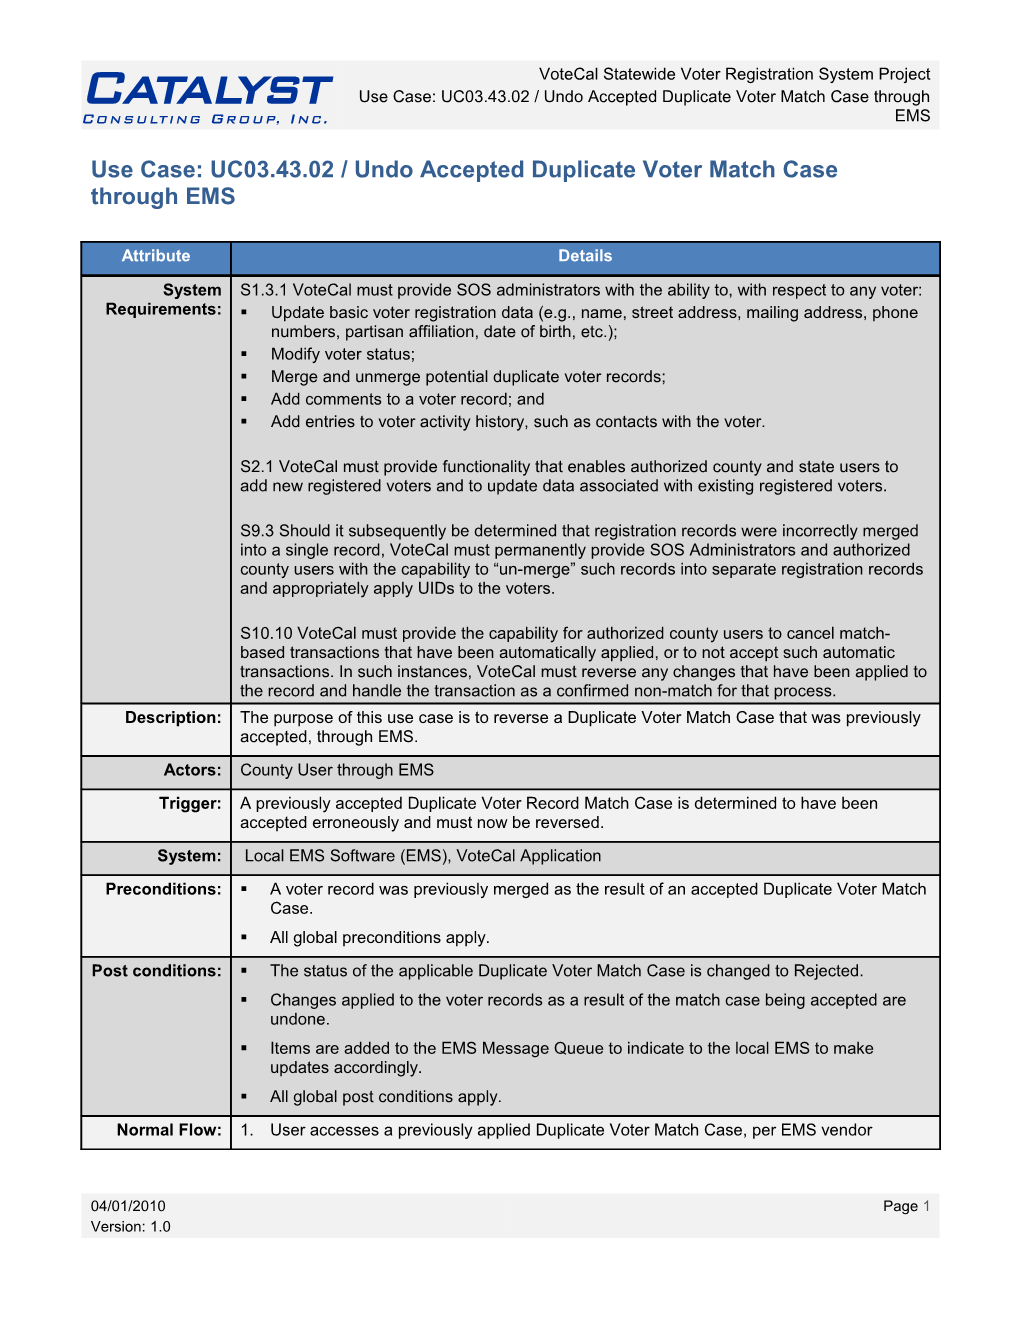 Use Case: UC03.43.02 Cik1 / Undo Accepted Duplicate Voter Match Case IV&V2 Through EMS IV&V3